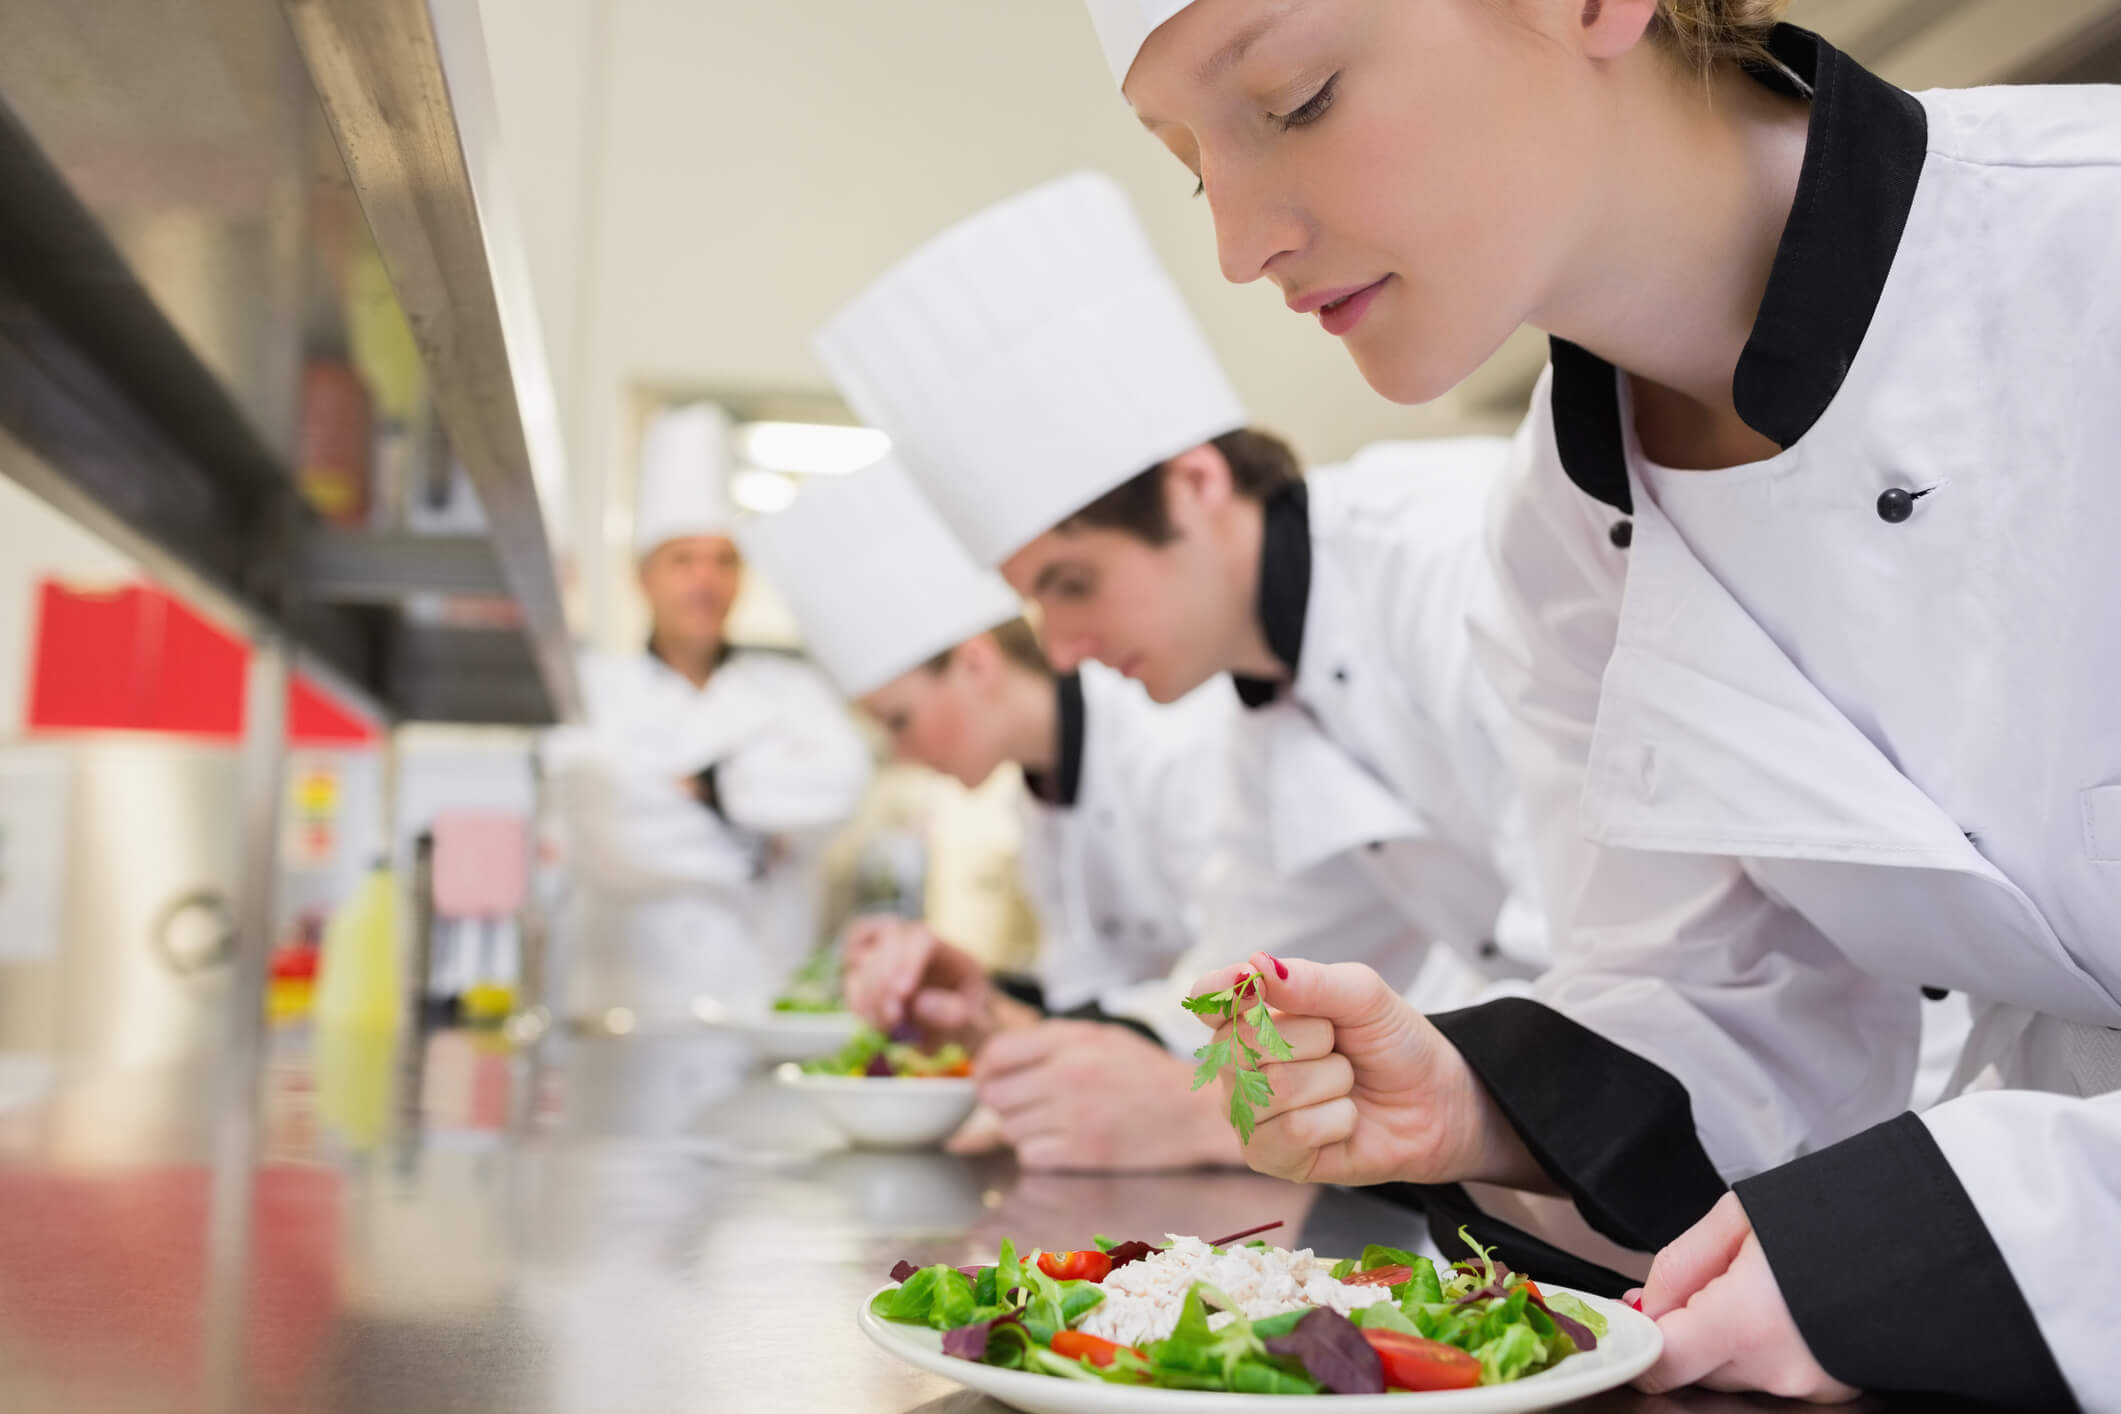 Culinary students preparing food